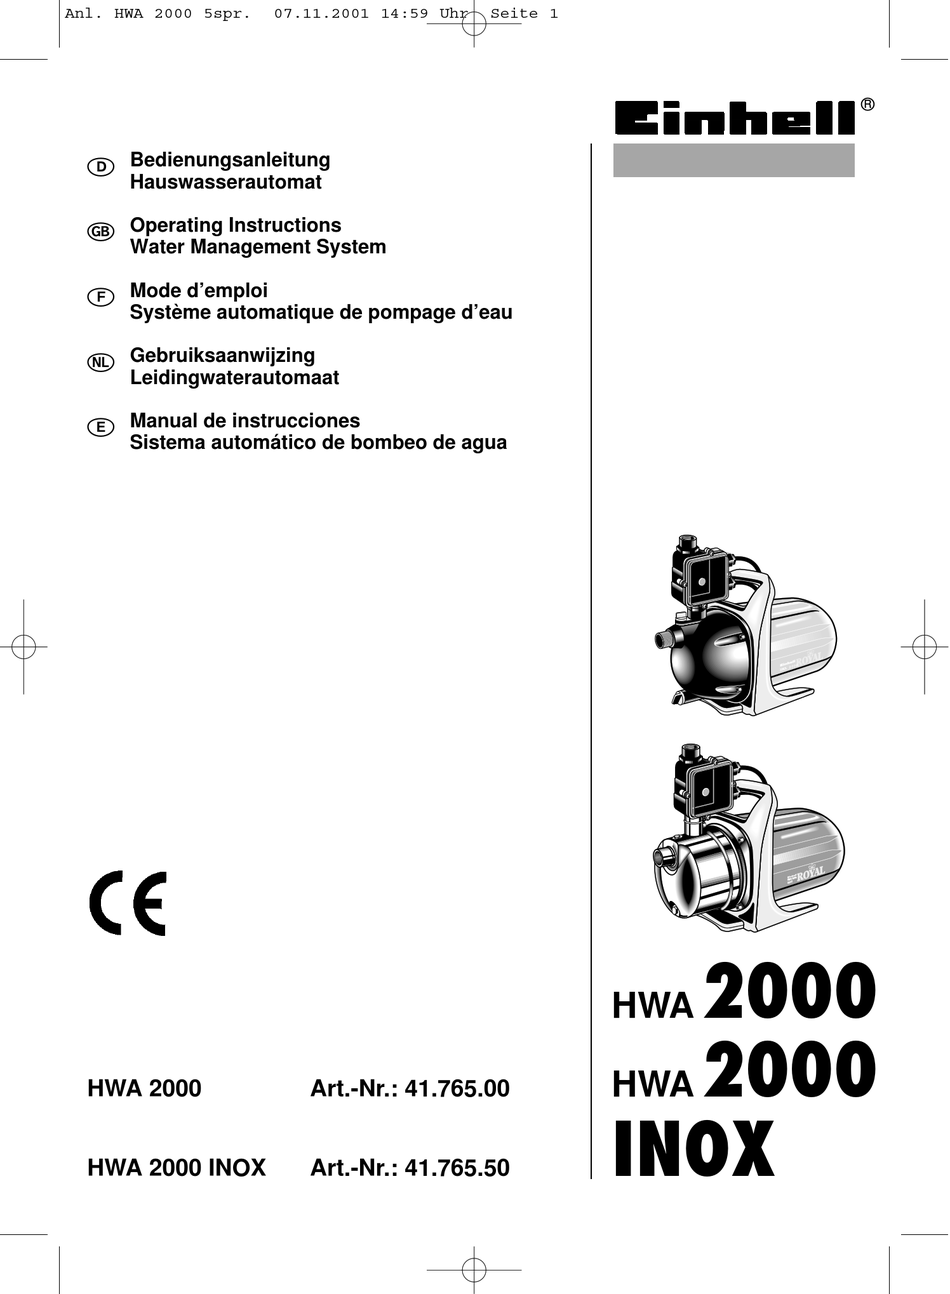 EINHELL HWA 2000 OPERATING INSTRUCTIONS MANUAL Pdf Download | ManualsLib